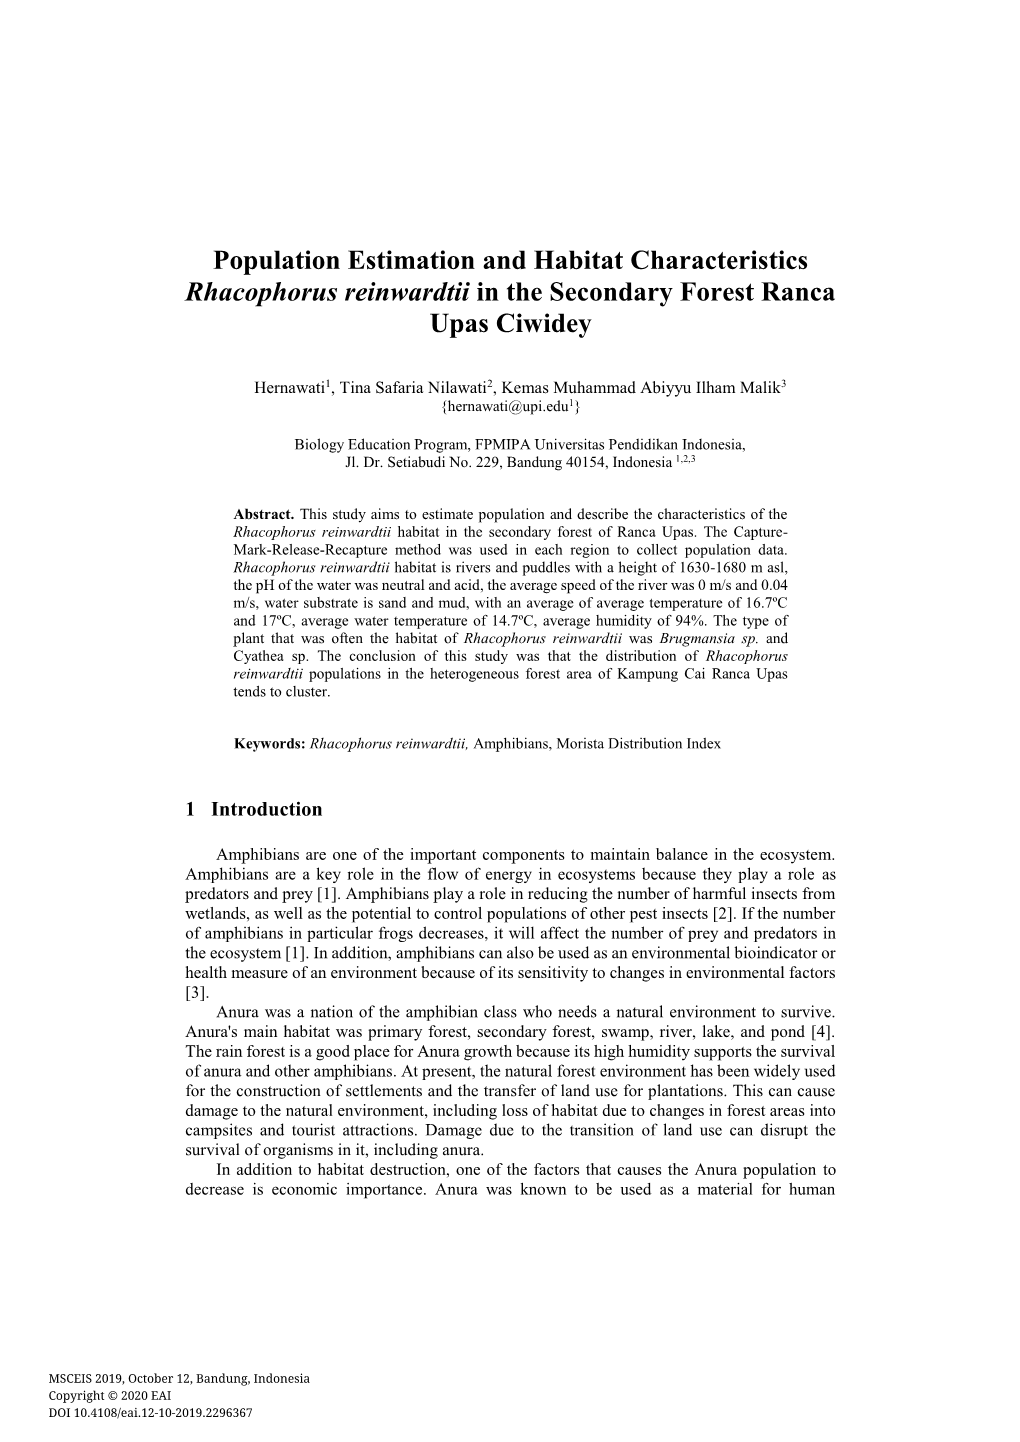 Population Estimation and Habitat Characteristics Rhacophorus Reinwardtii in the Secondary Forest Ranca Upas Ciwidey